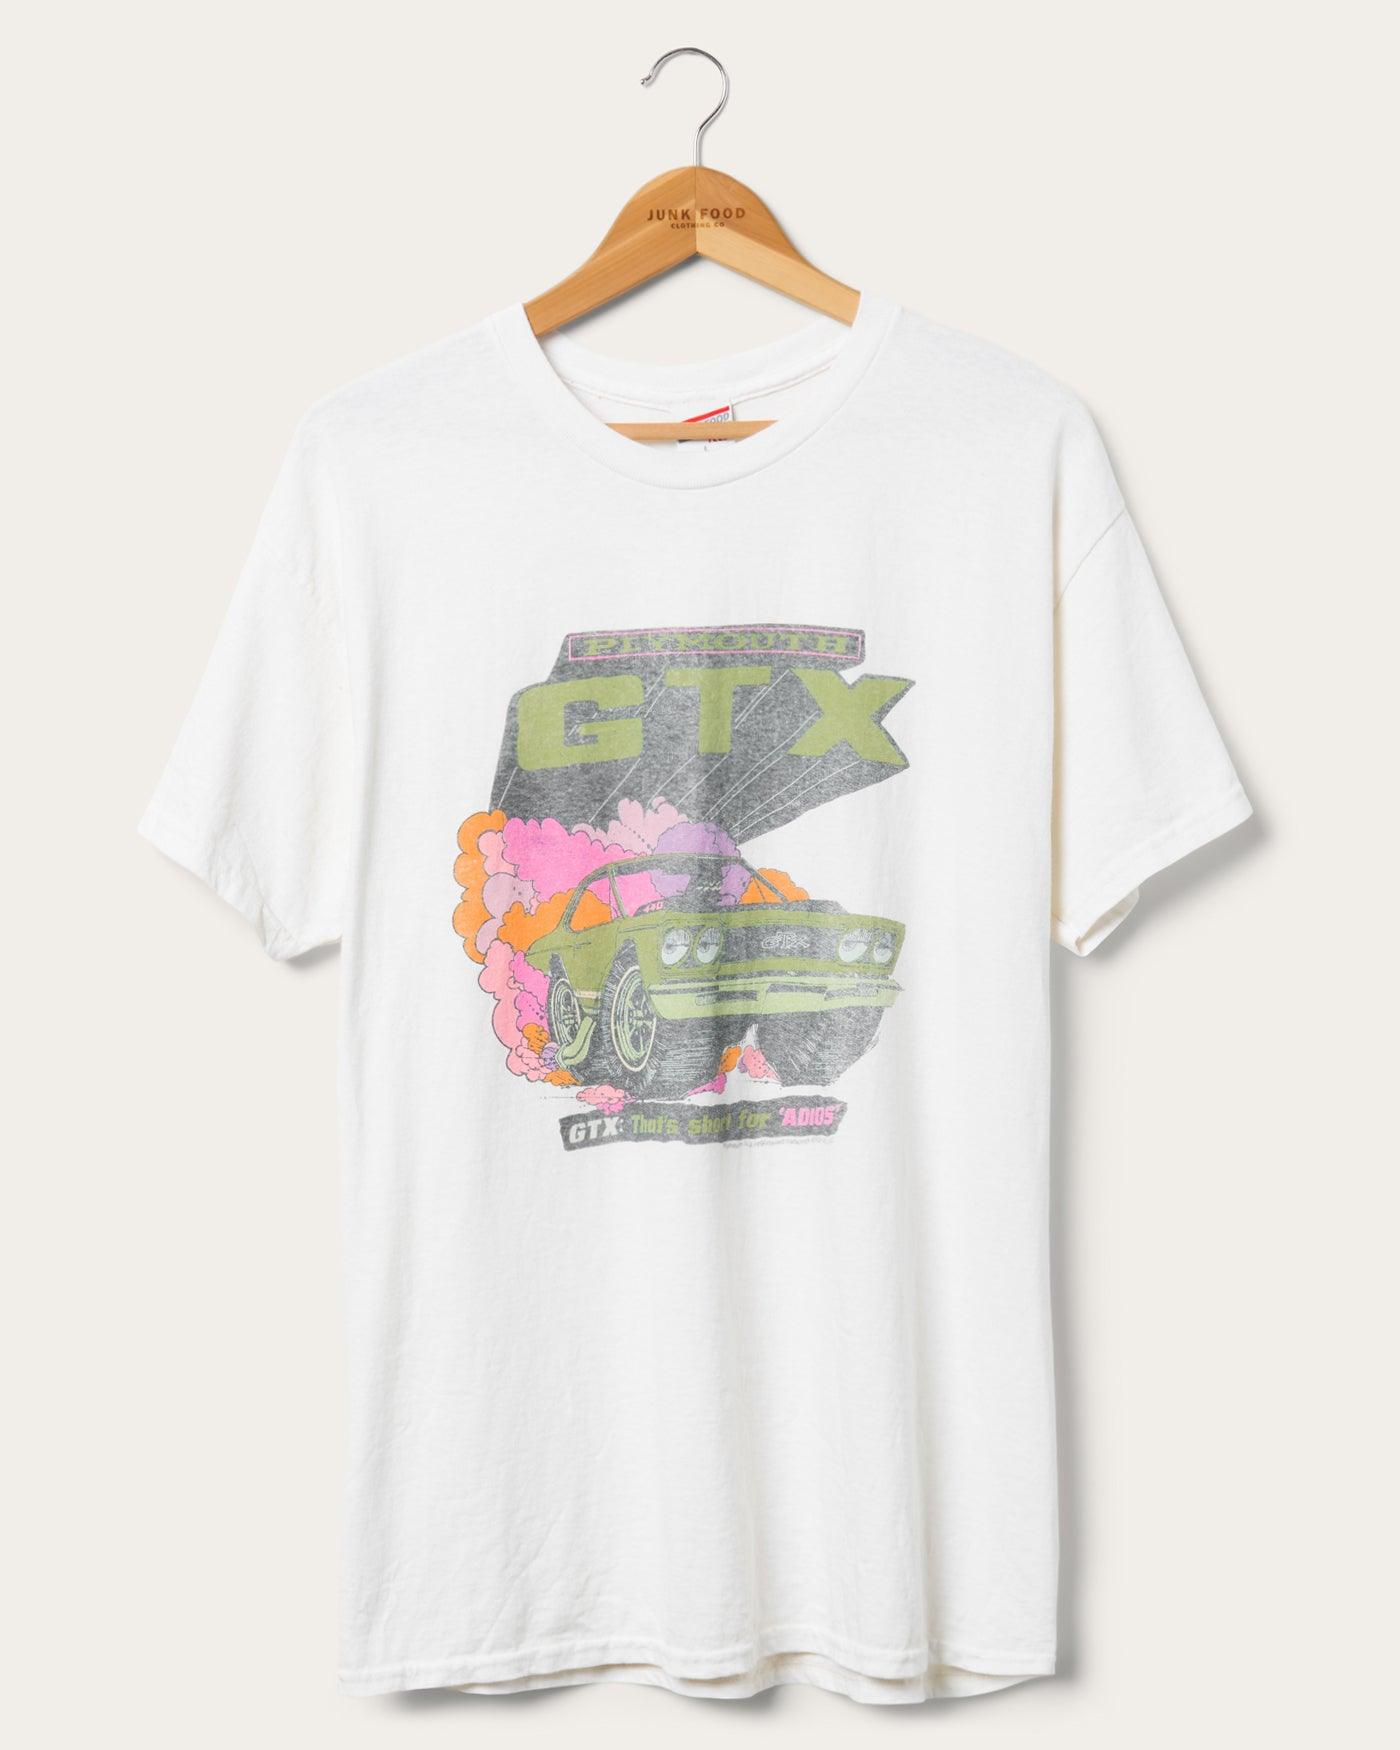 GTX Adios Flee Market T-Shirt